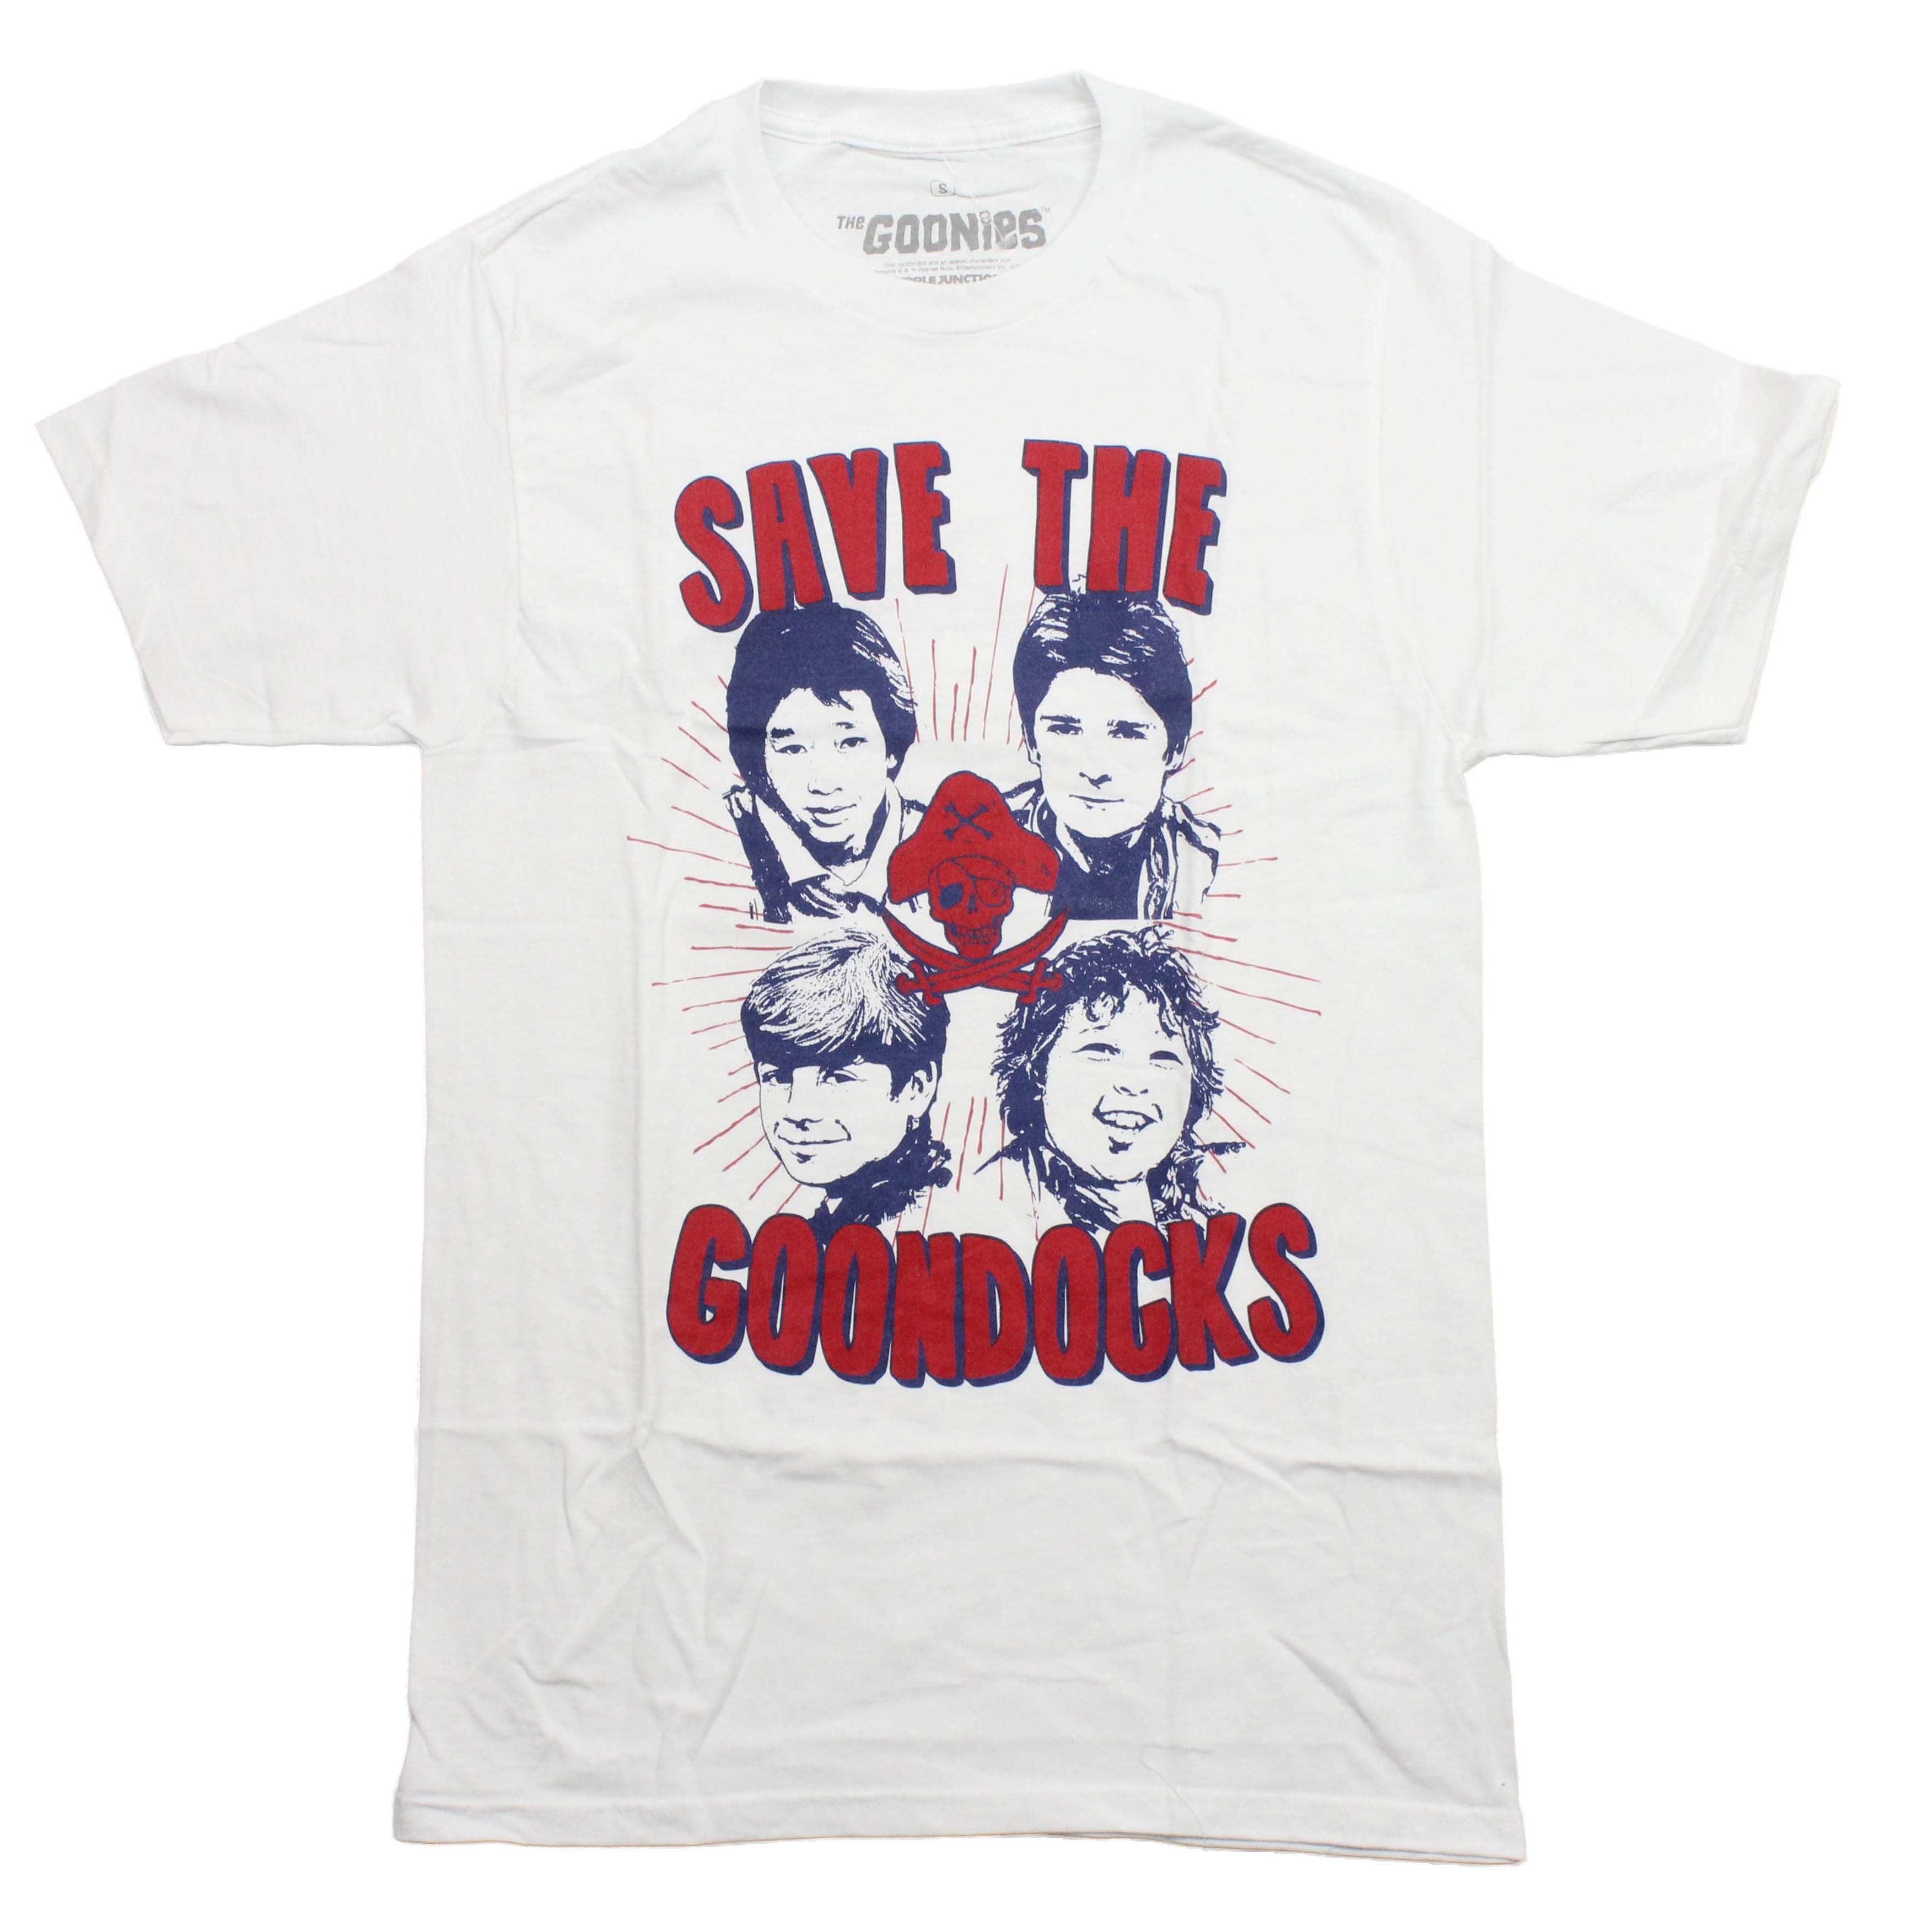 The Goonies Mens T-Shirt - Save the Goondocks Head Images